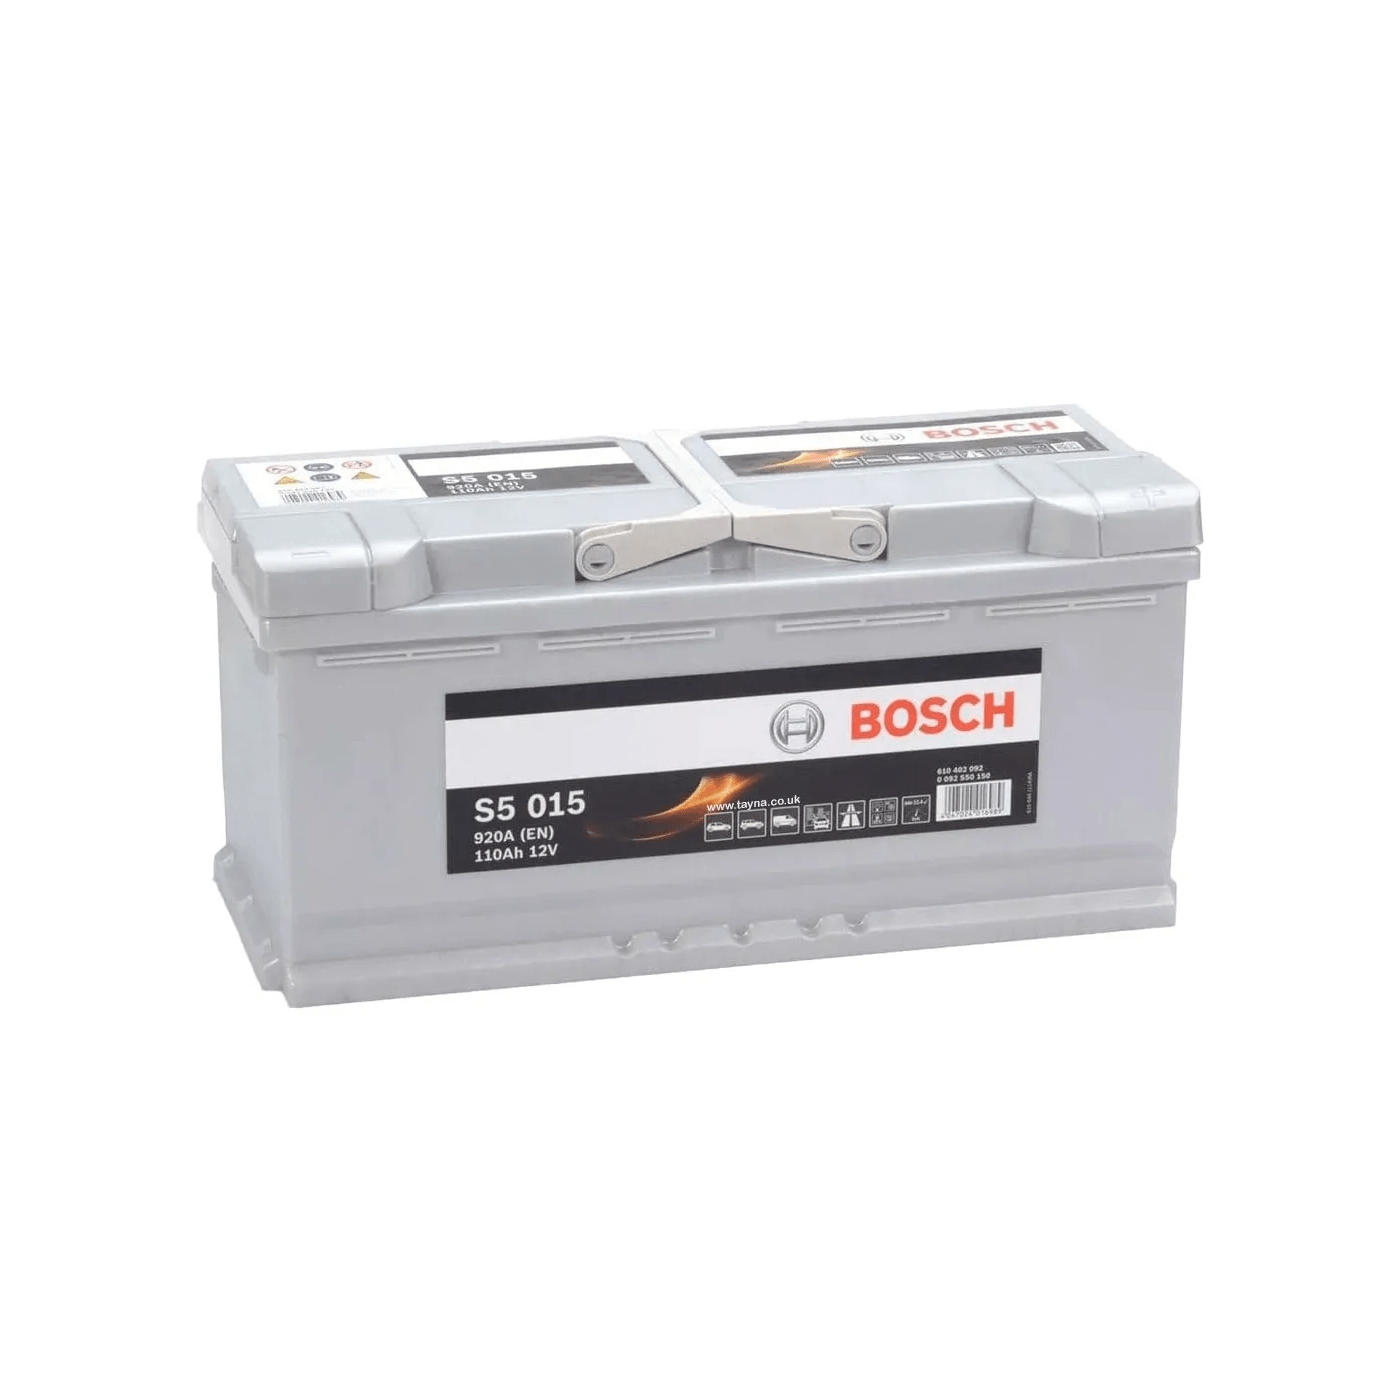 Bosch S5 Car Battery 020 - 5 Year Guarantee | ML Performance UK Car Parts